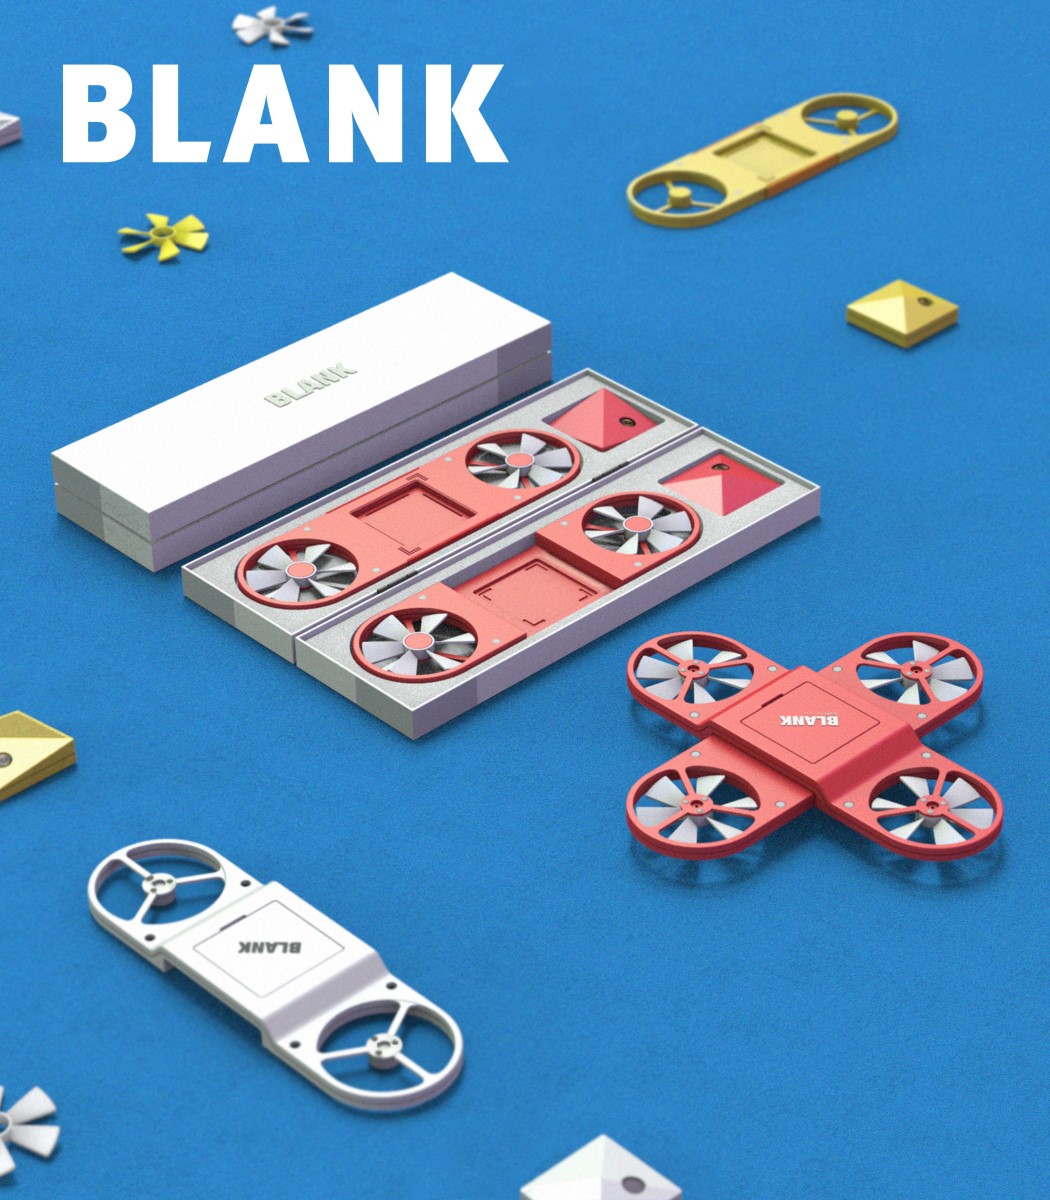 blank_drone_1